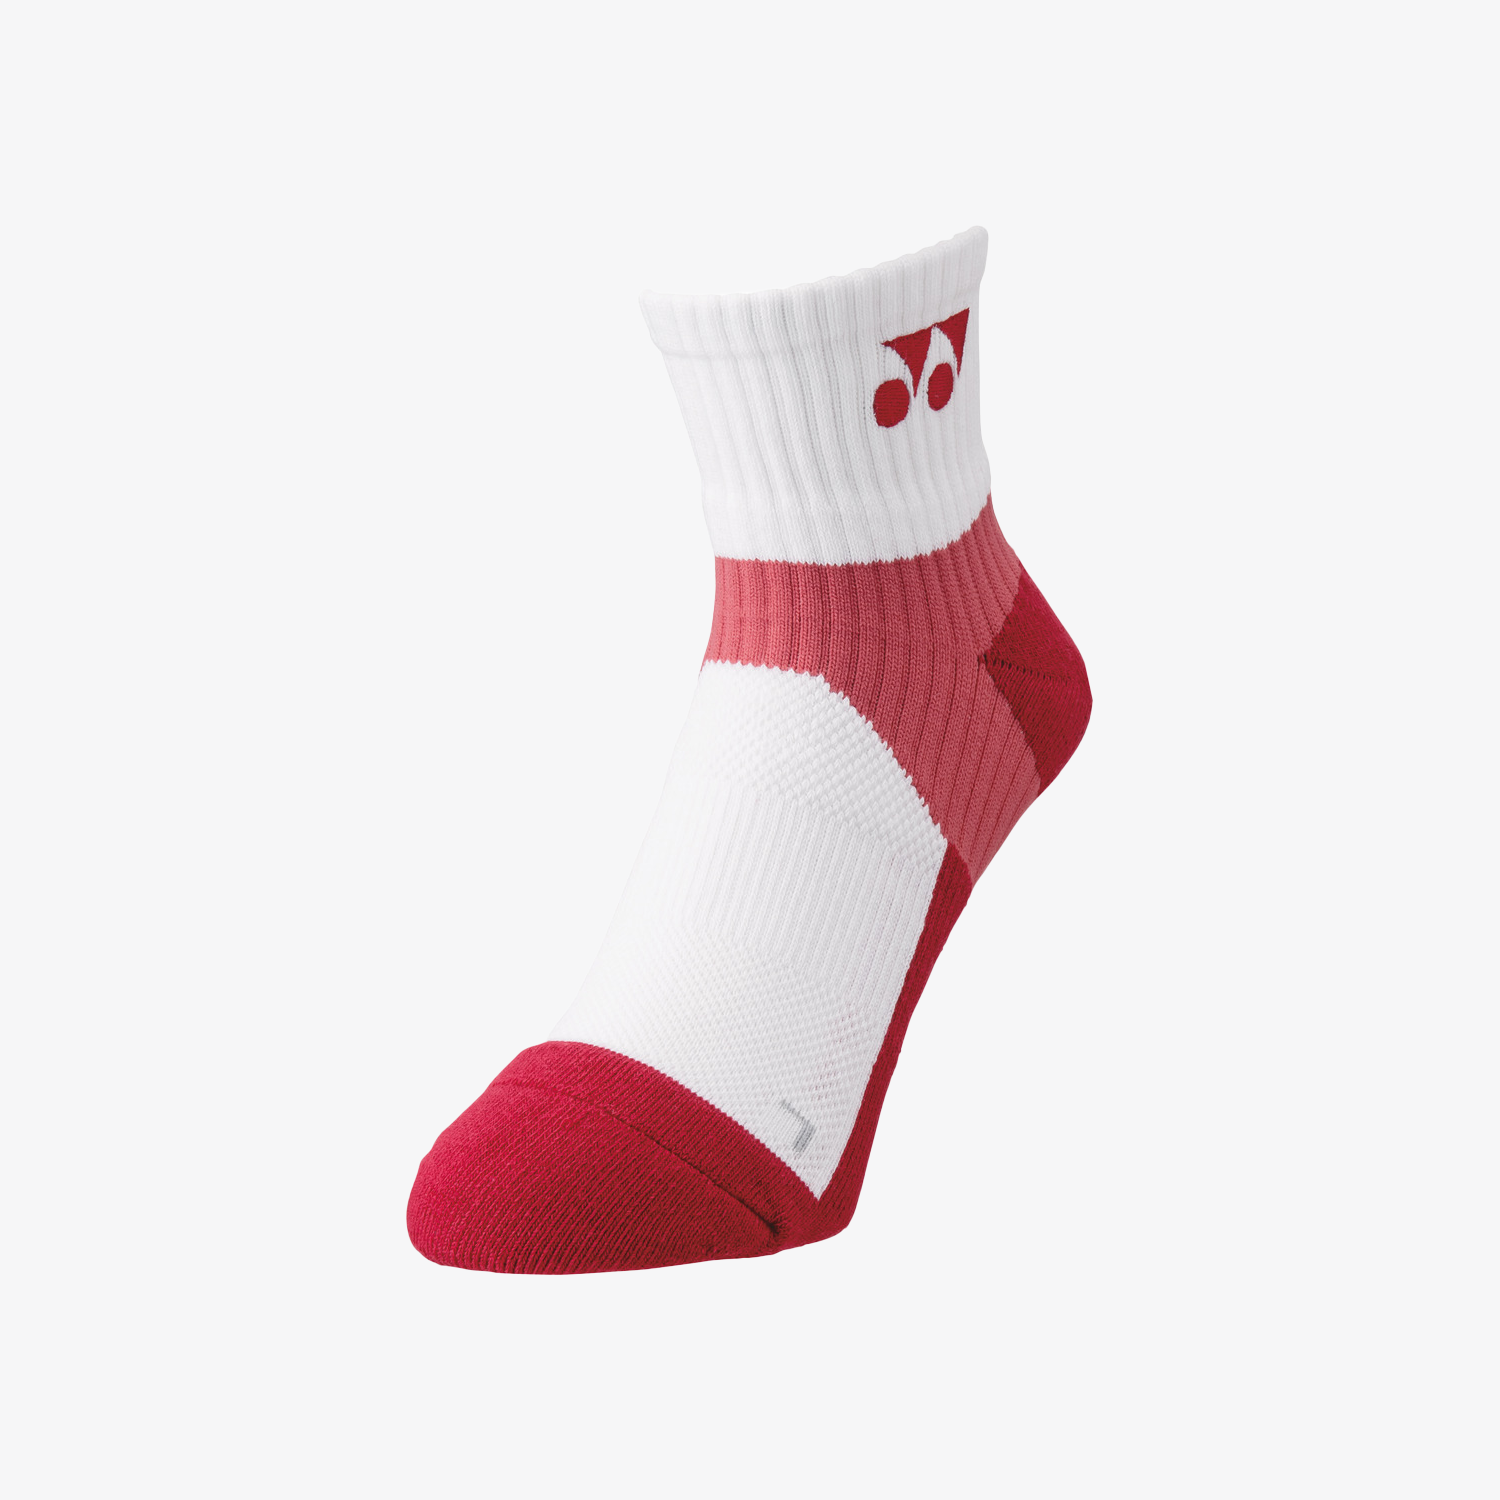 Yonex Men's Sports Crew Socks 19152DPRM (Deep Red) 